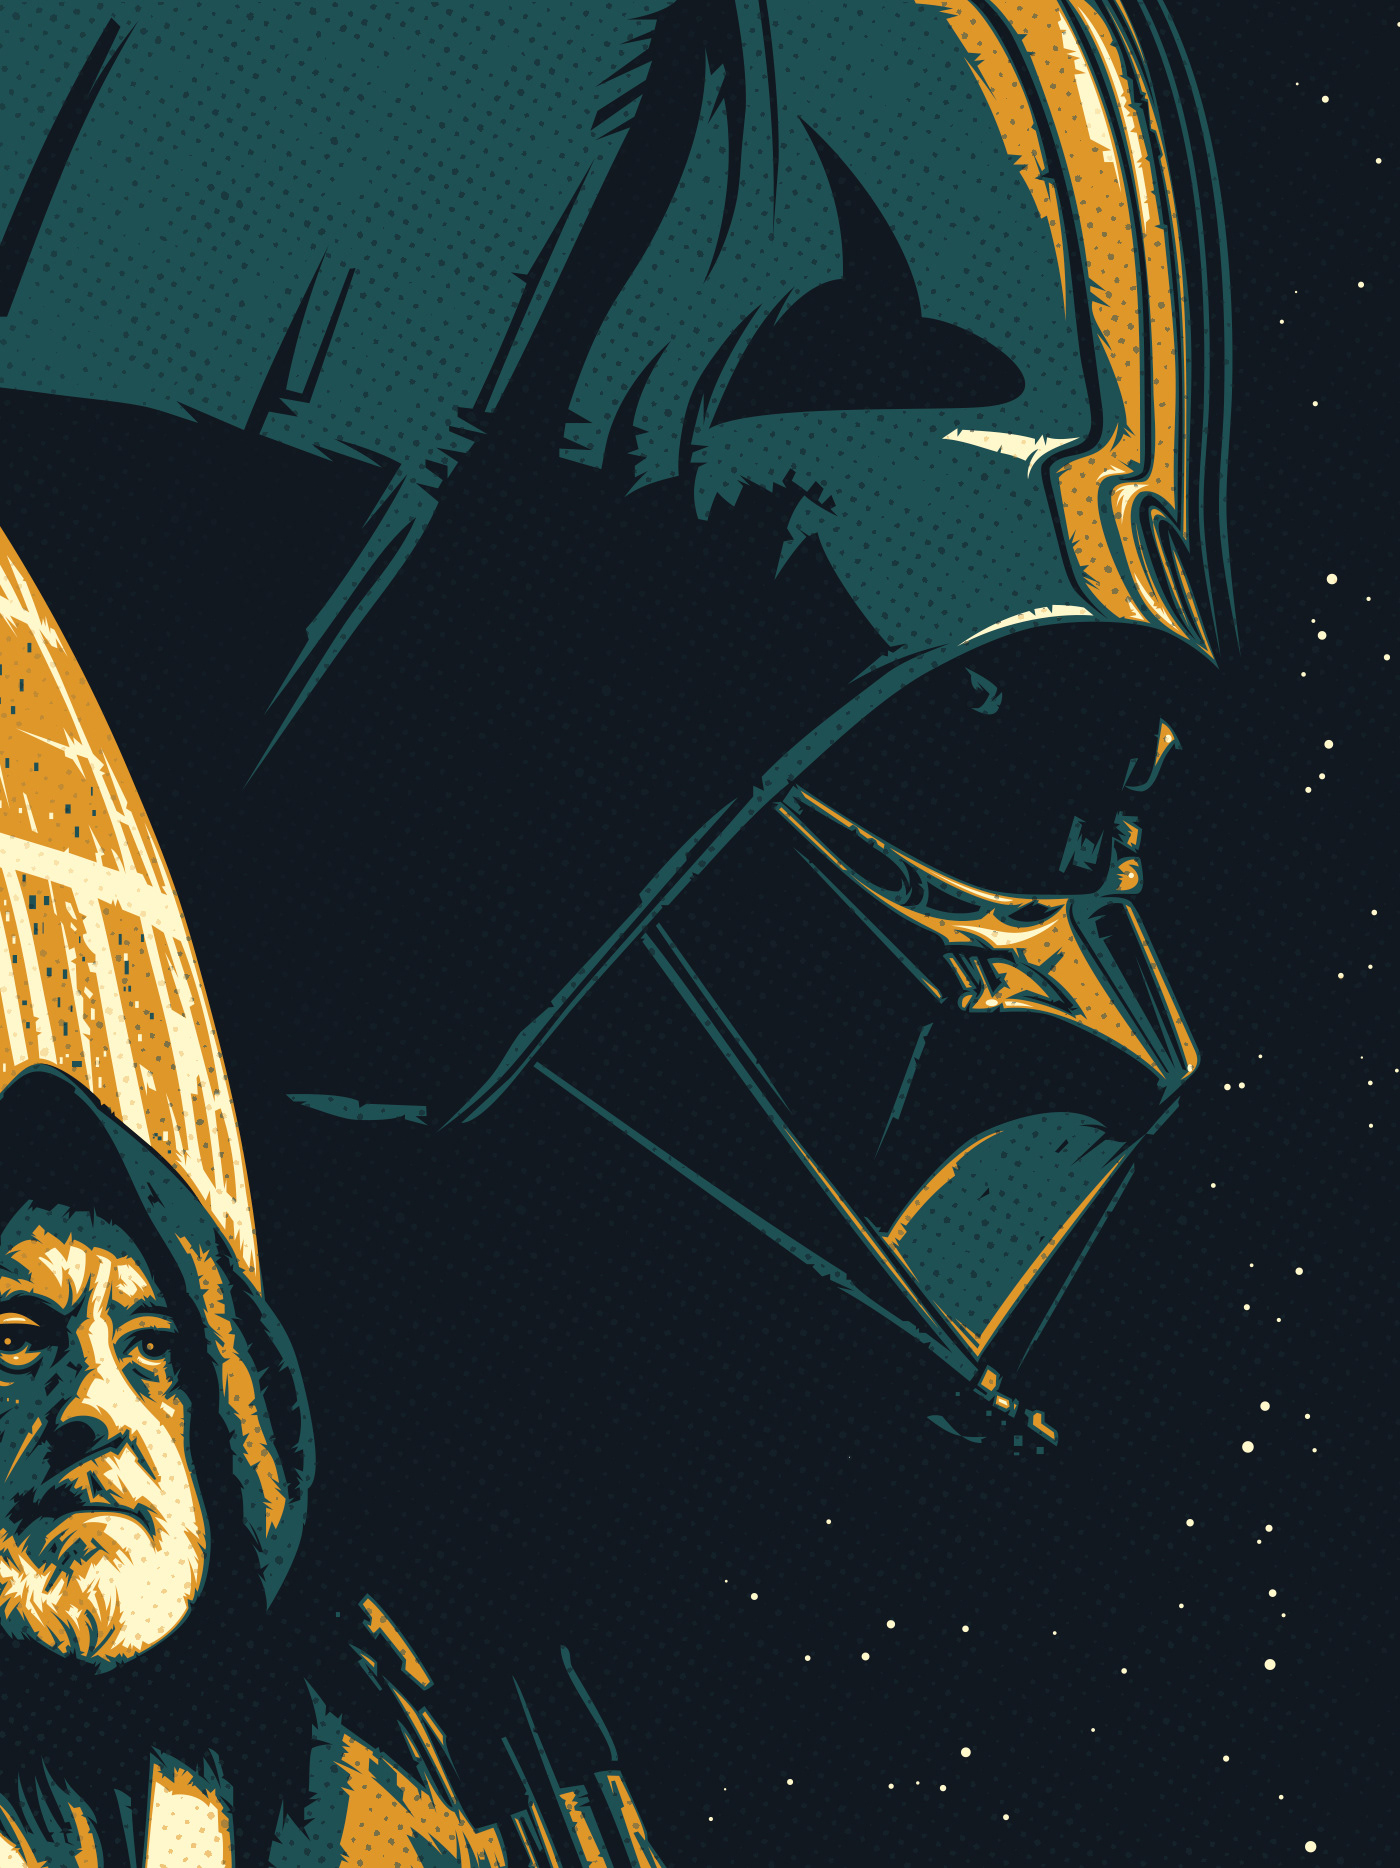 star wars darth vader luke skywalker Obi-Wan Kenobi Han Solo Leia millennium falcon Chewbacca death star